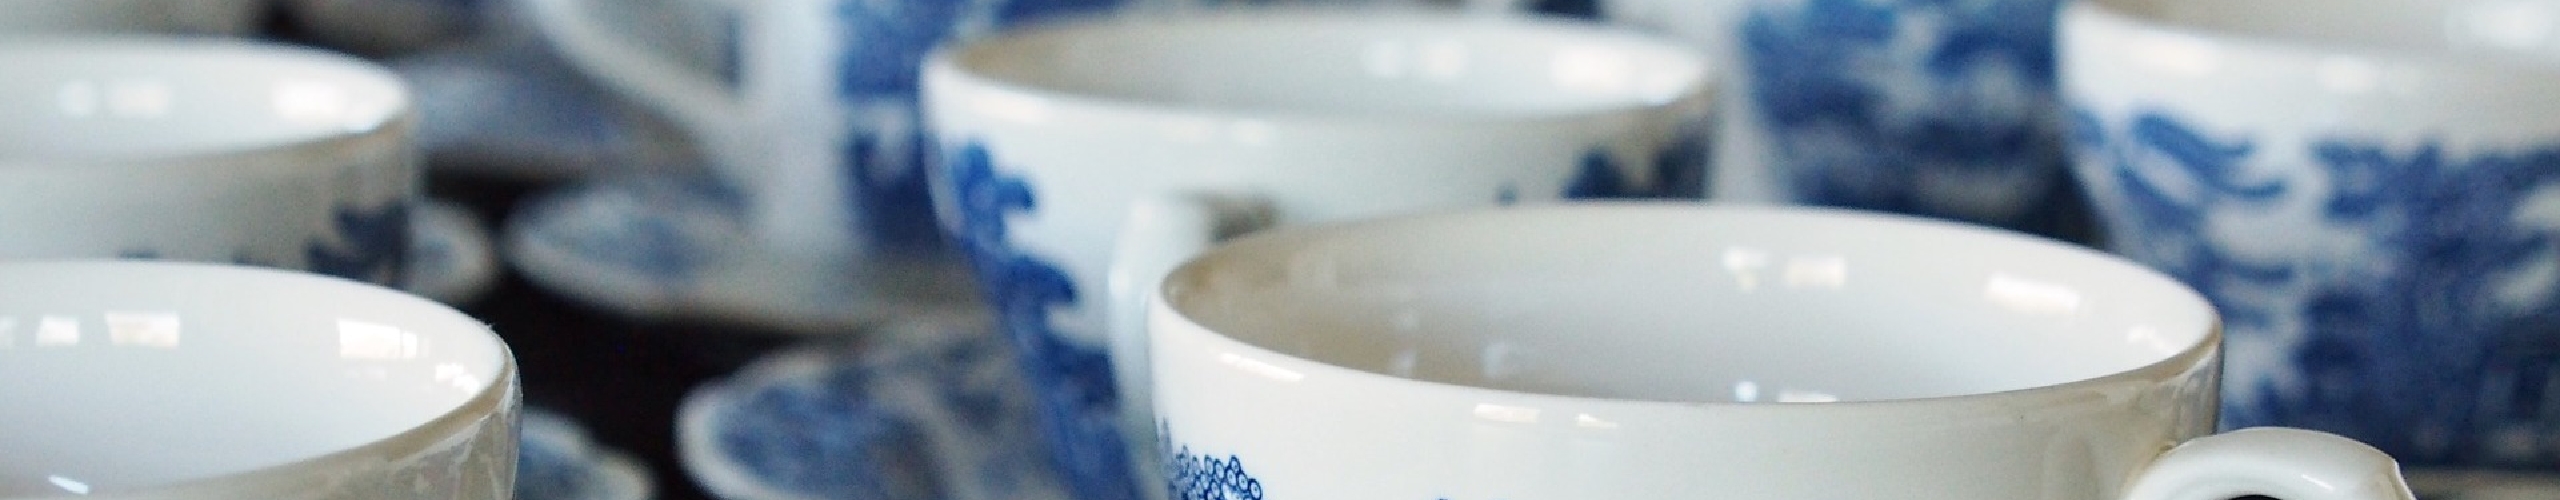 Tea cups panel background